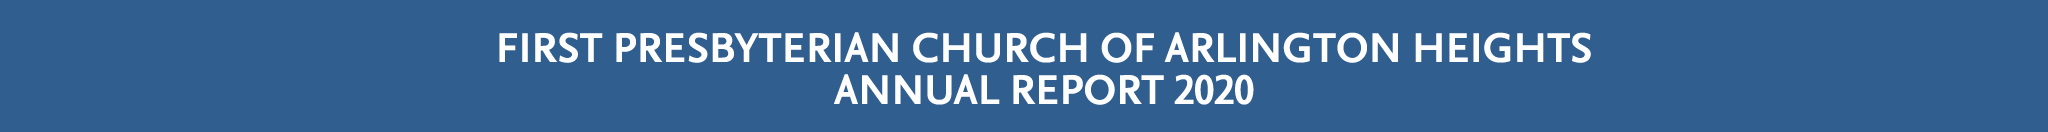 First Presbyterian Church of Arlington Heights Annual Report 2020